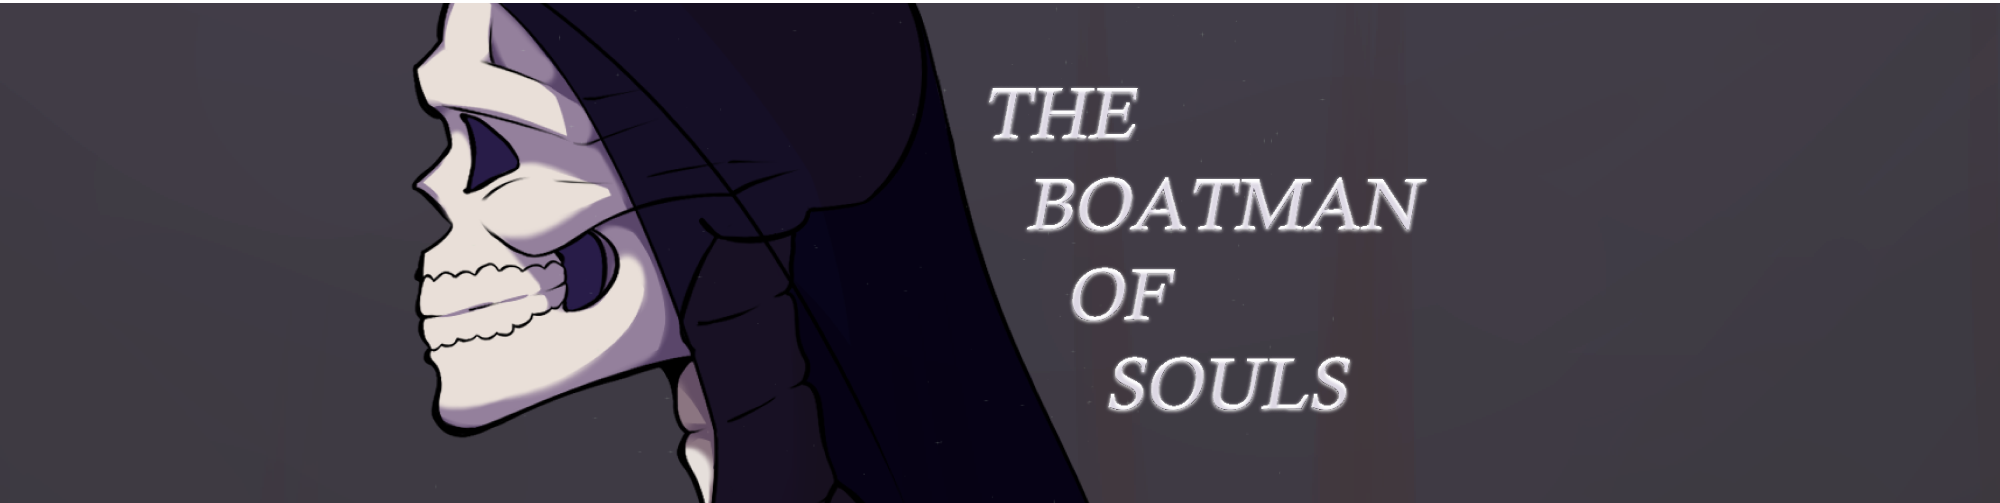 The Boatman of Souls